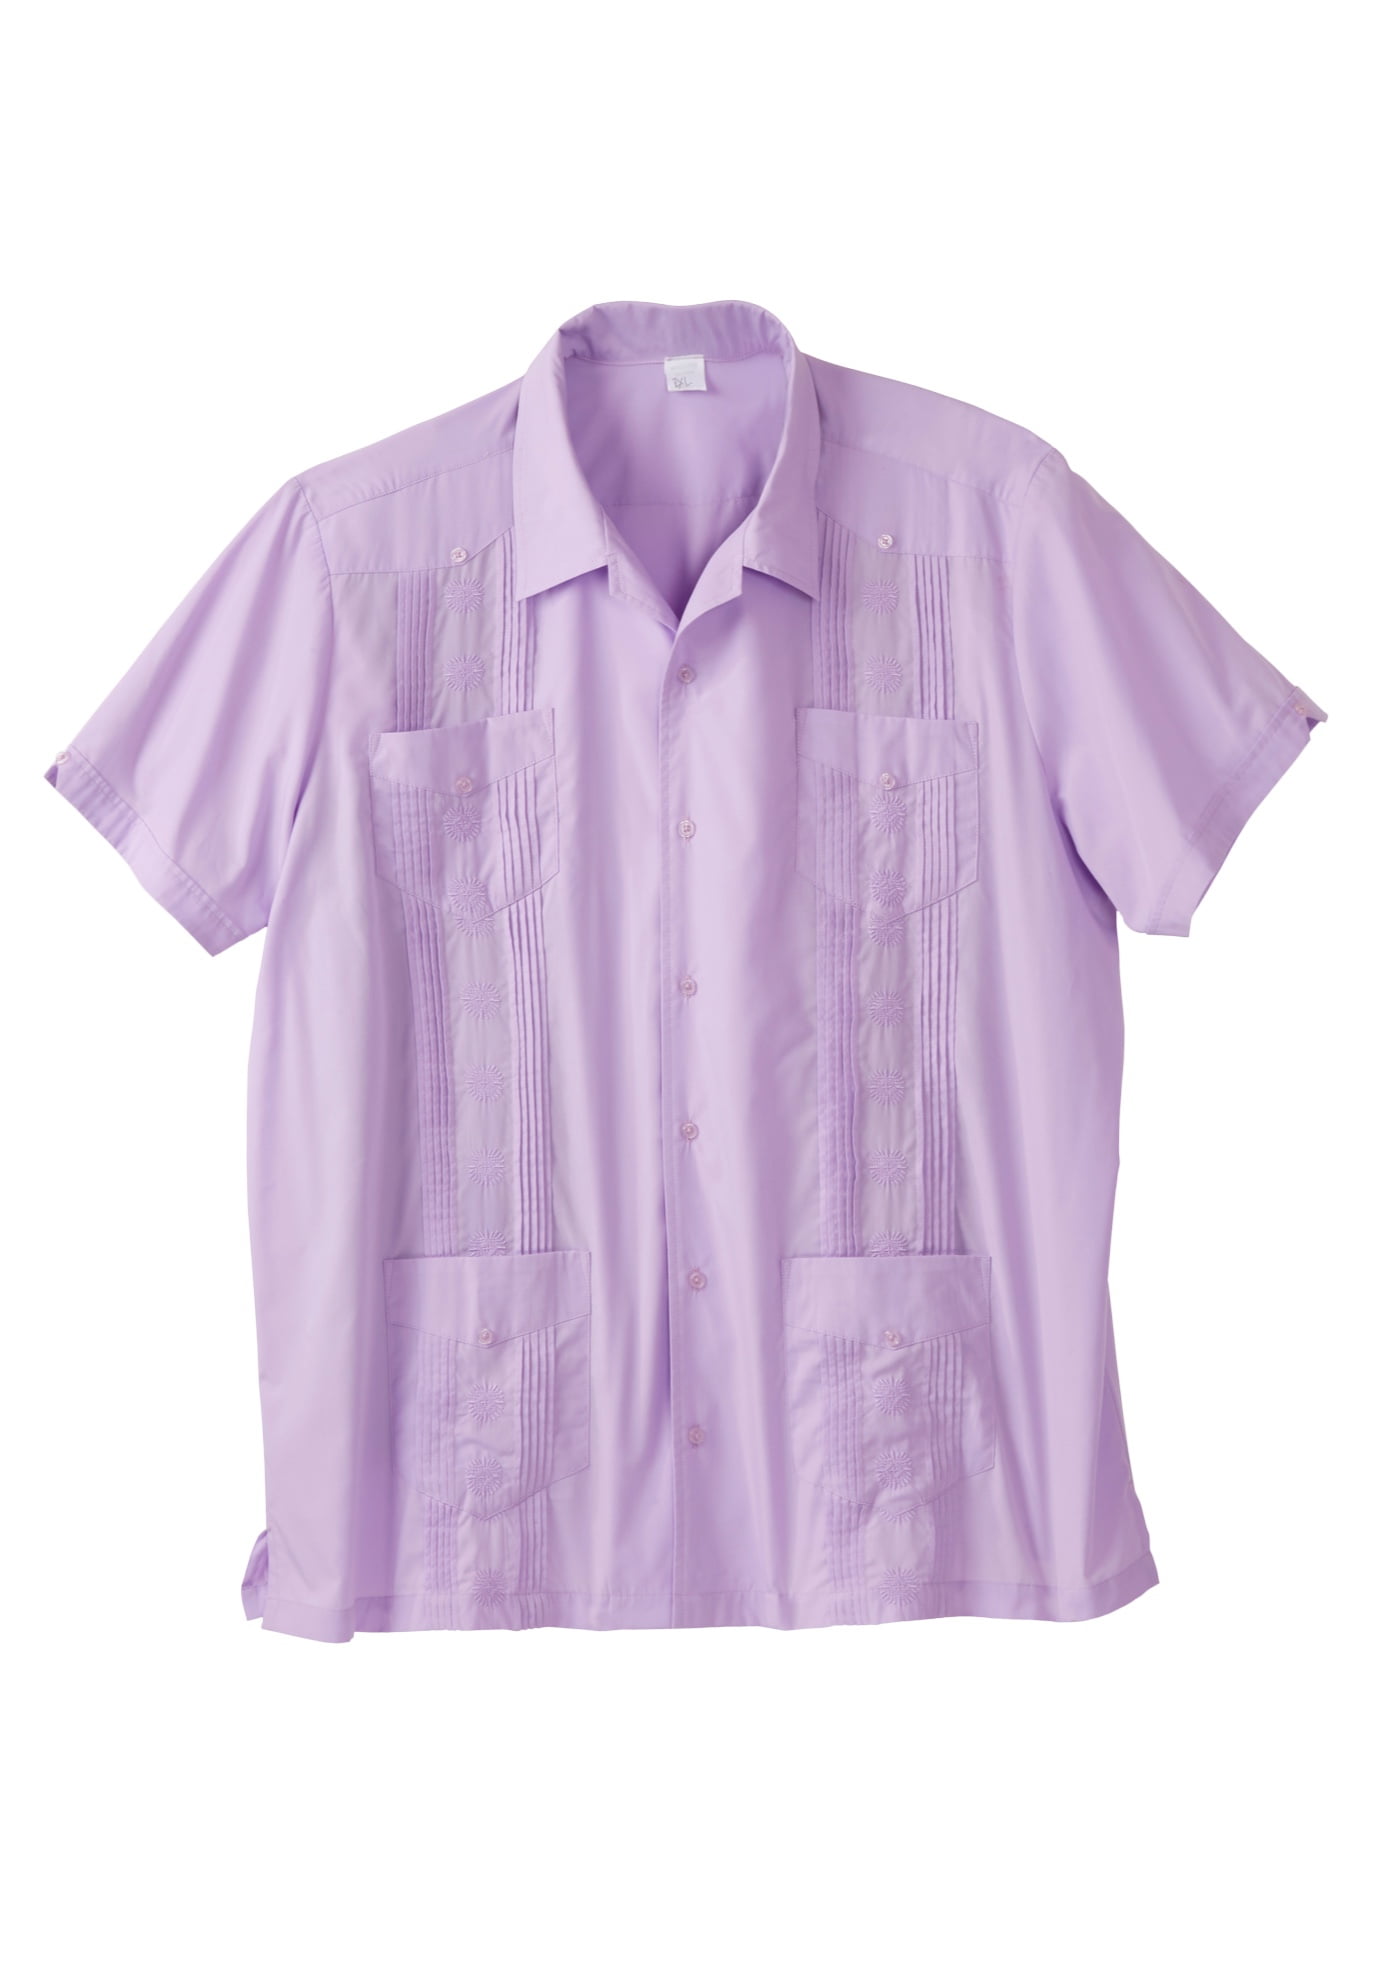 KS Island by Kingsize Mens Big & Tall Short-Sleeve Guayabera Shirt 